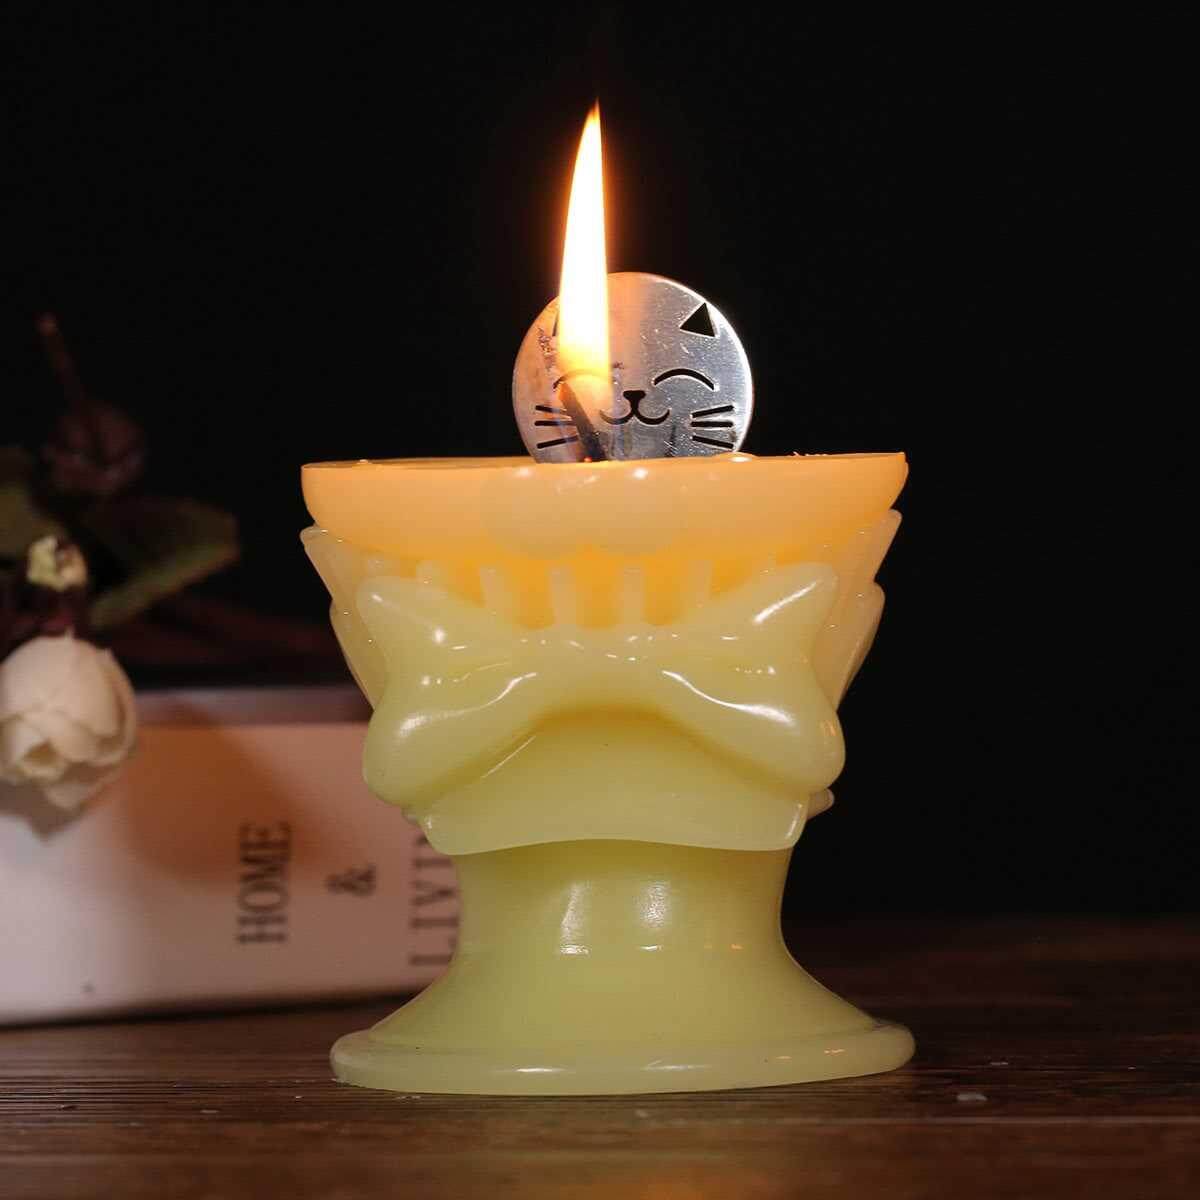 Tomfeel Aroma Candle - Yellow Kitten Decorative Aromatherapy Wax Natural Cotton Wick (yellow)